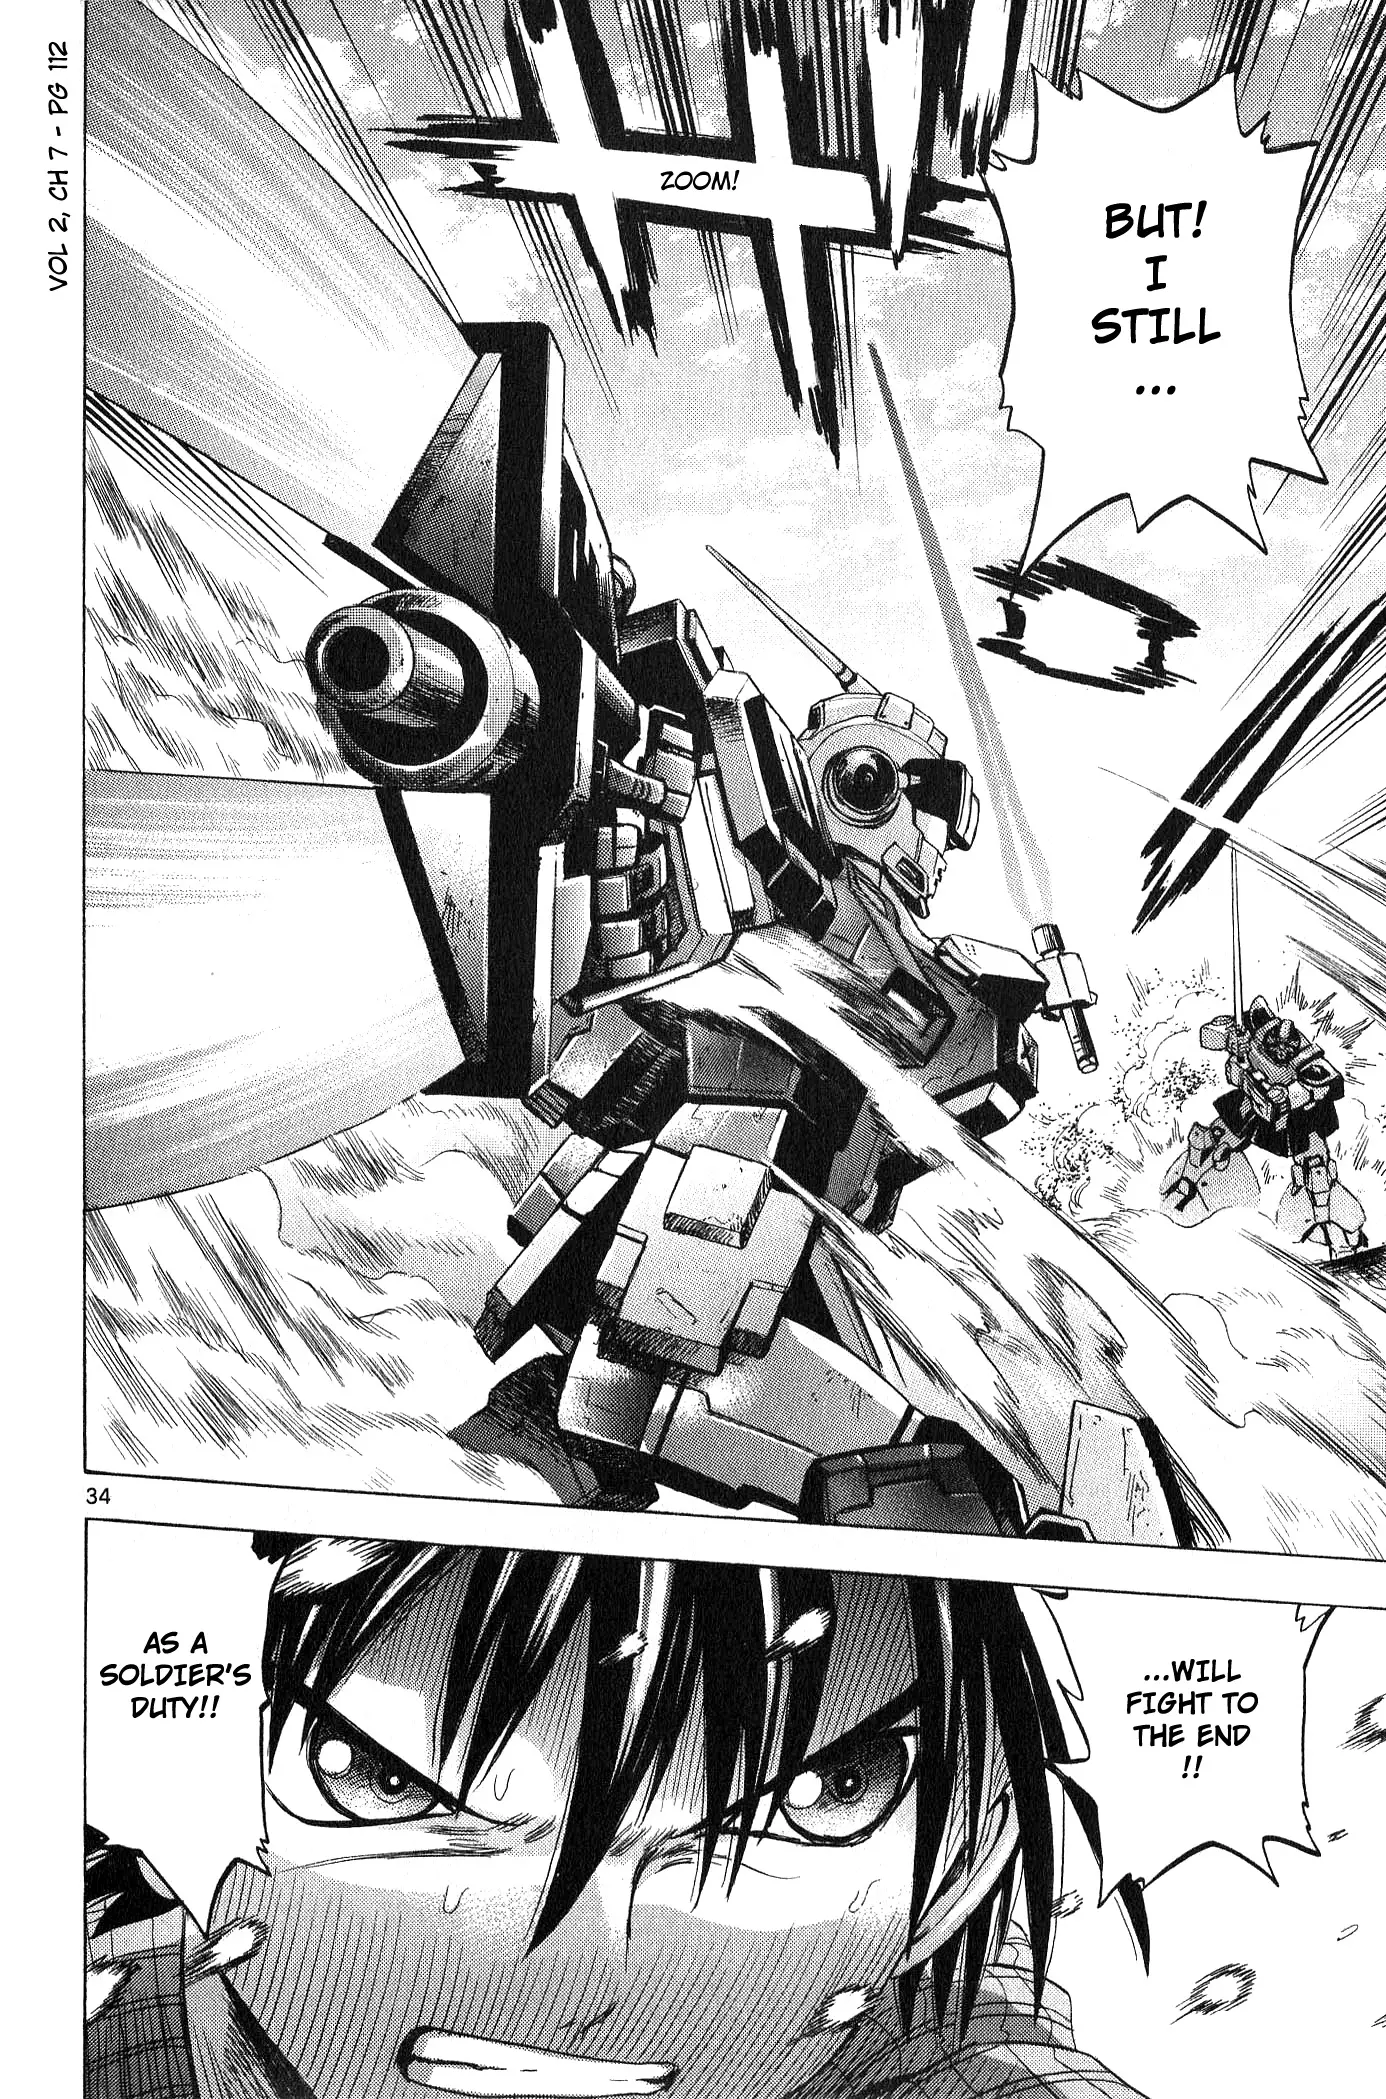 Mobile Suit Gundam Aggressor - 7 page 32-0572a43c